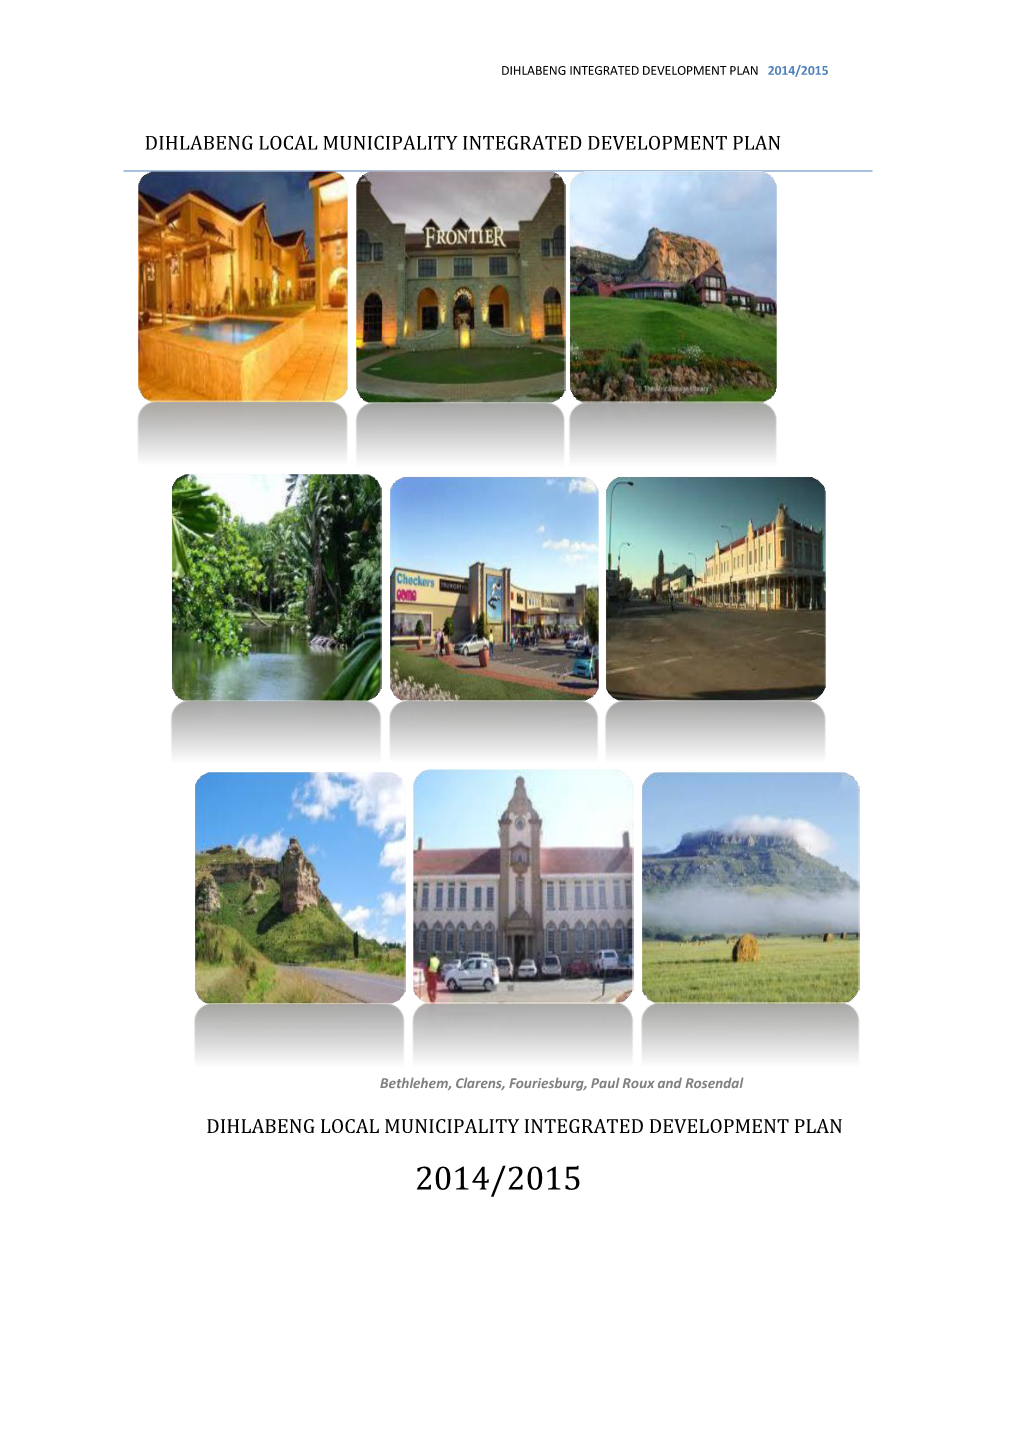 Dihlabeng Integrated Development Plan 2014/2015